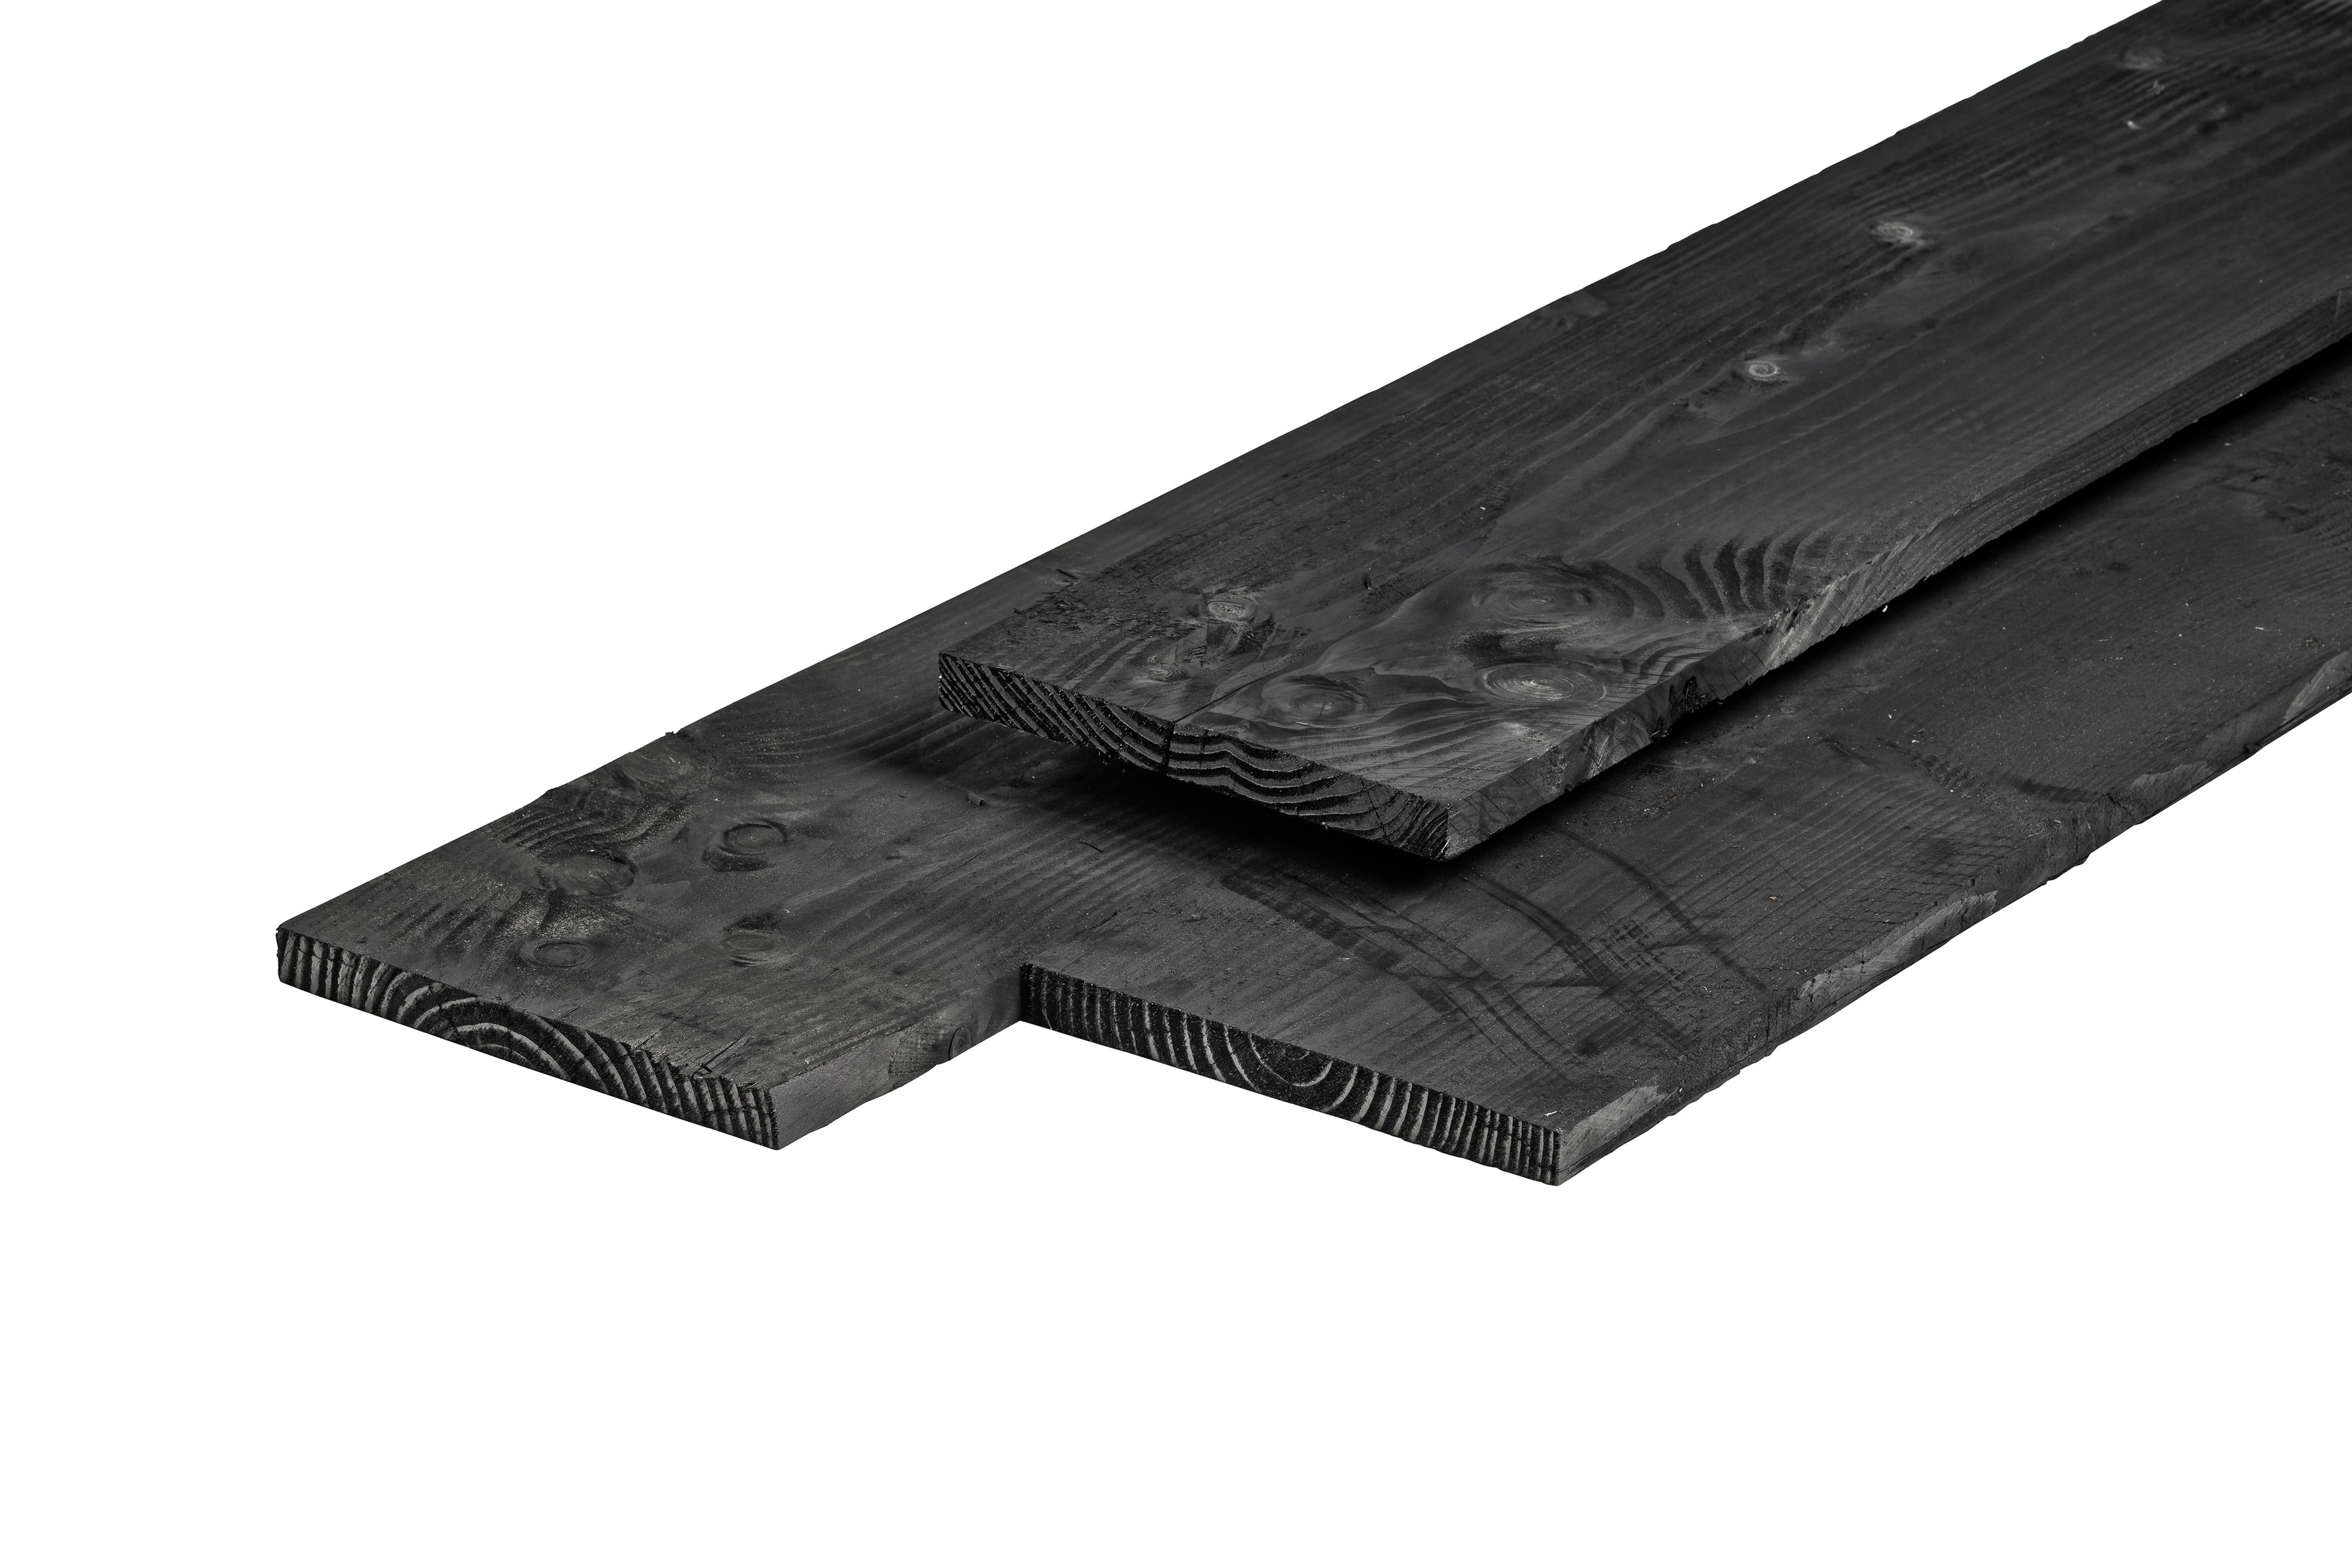 Plank douglas zwart geïmpregneerd 2.5x25.0x400cm